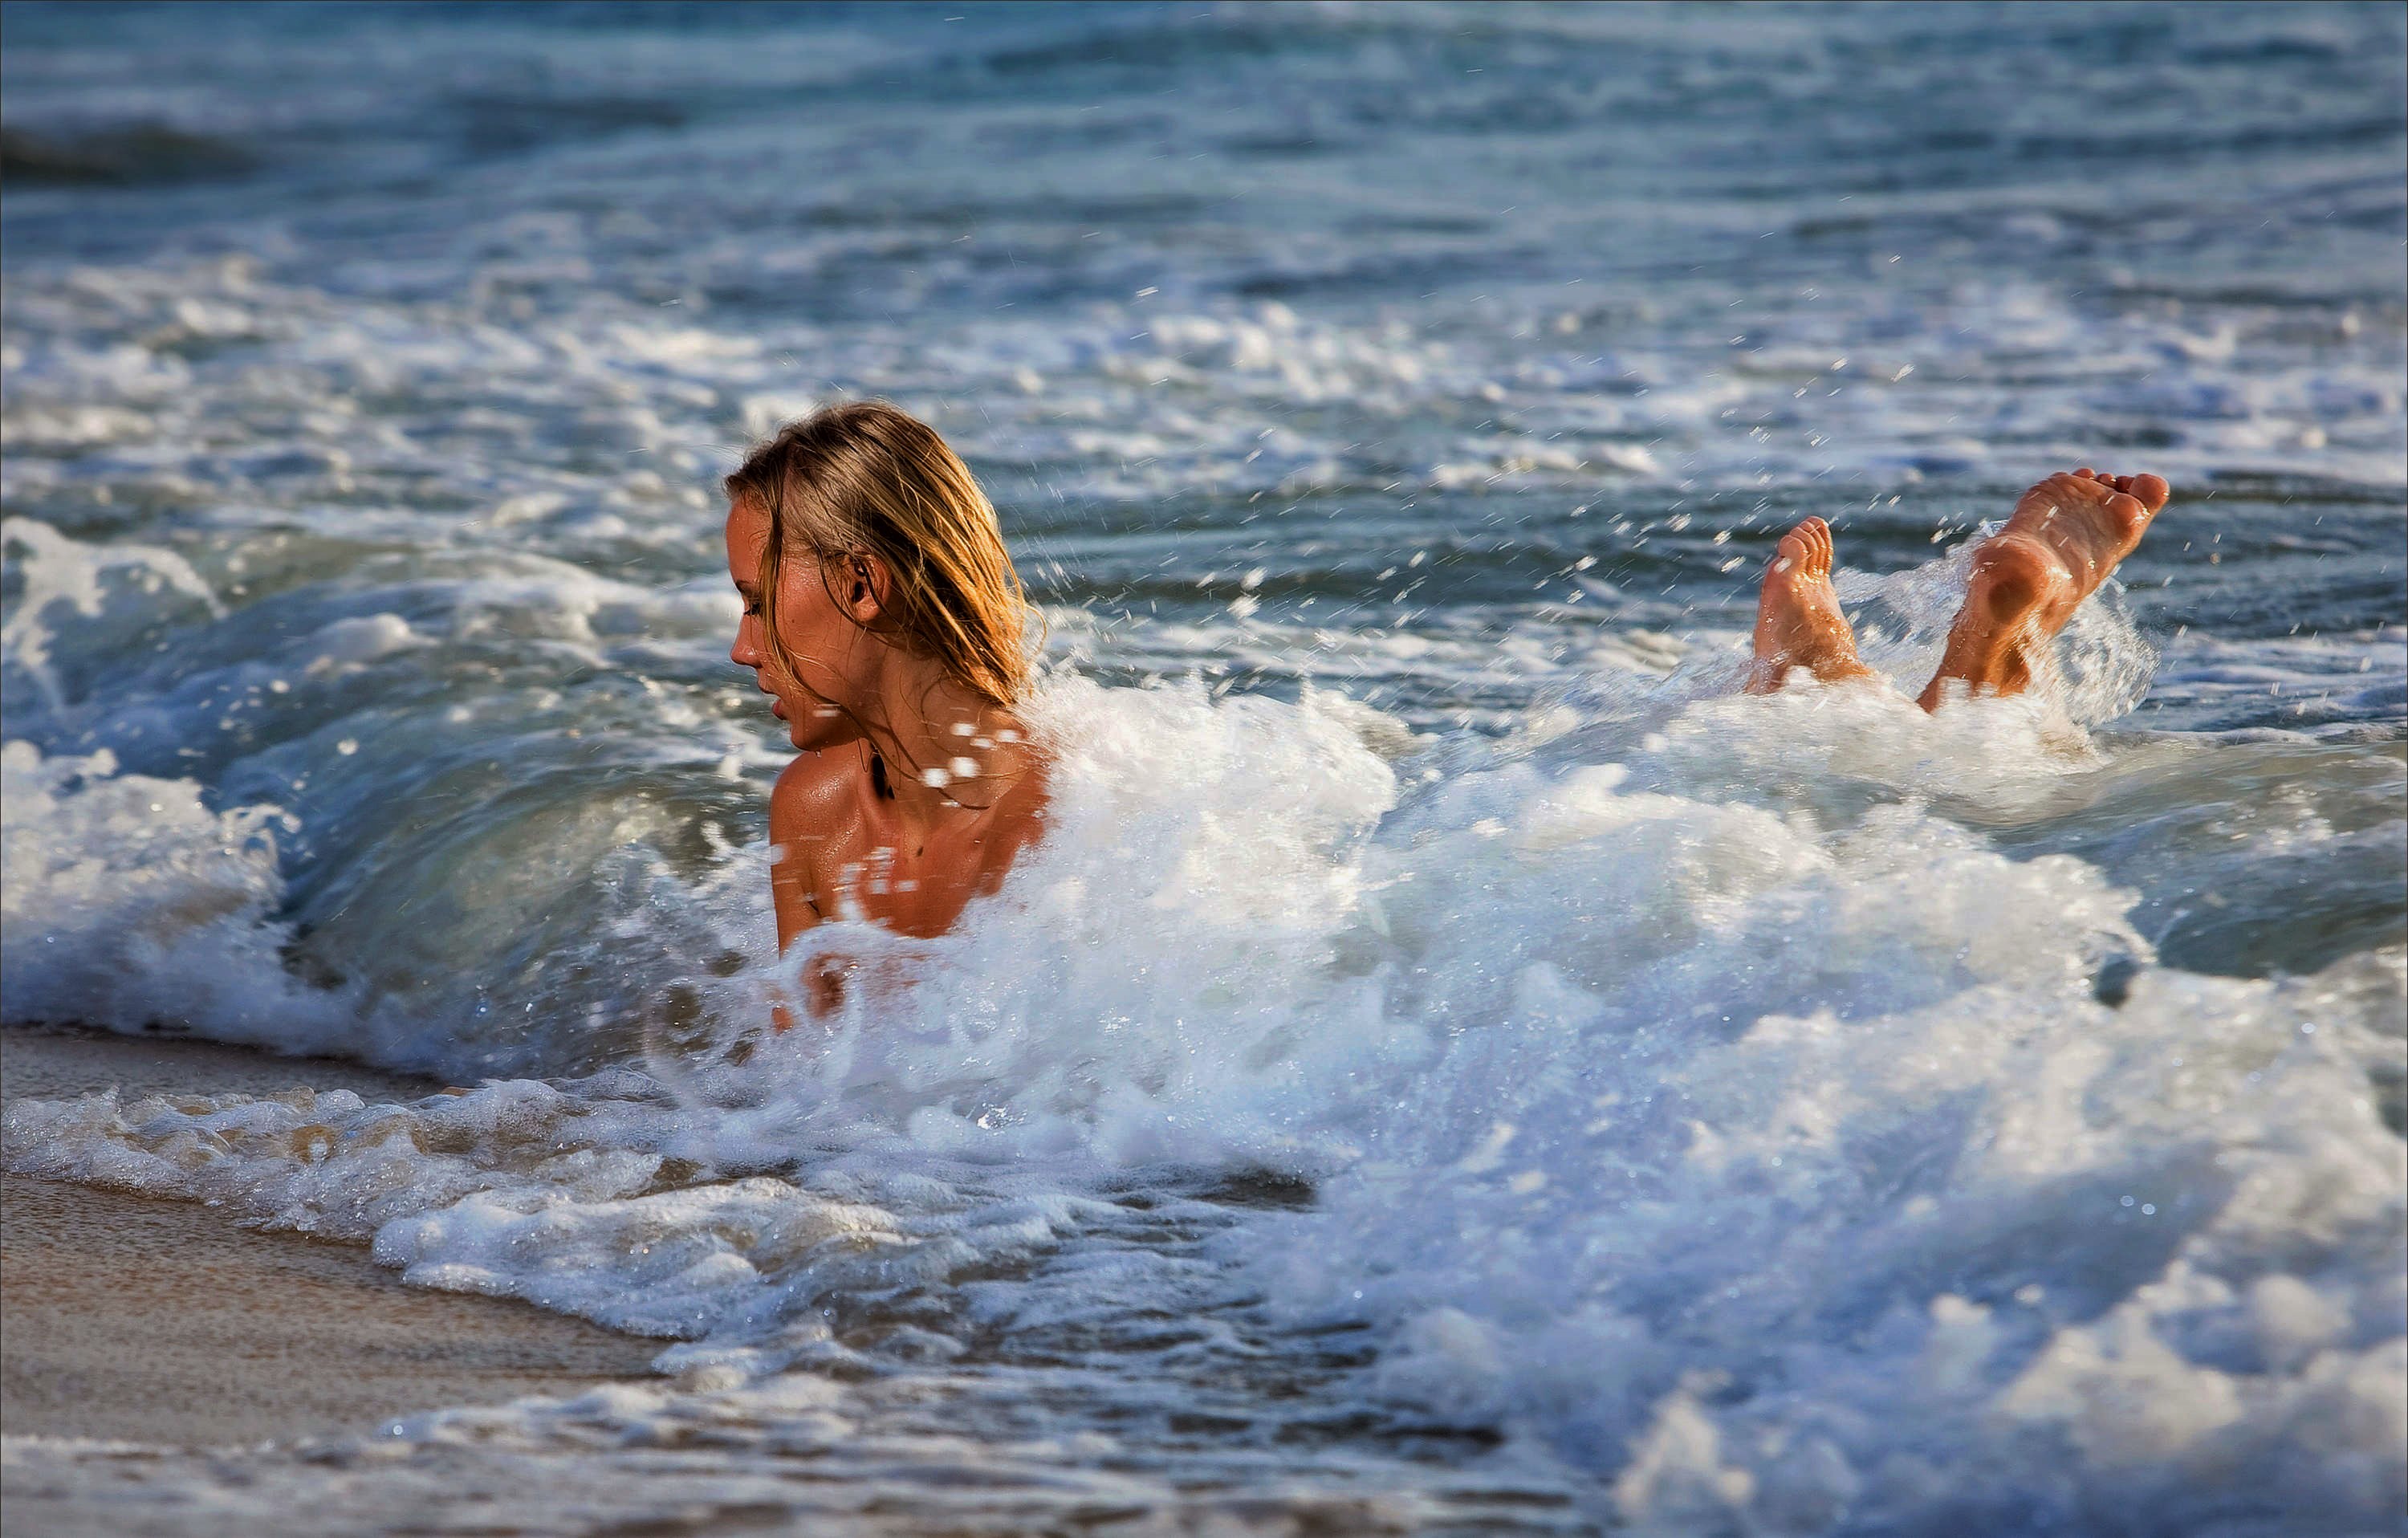 Сходить море. Девушка-море. Фотосессия на море. Девушка купается в море. Девушка в волнах моря.